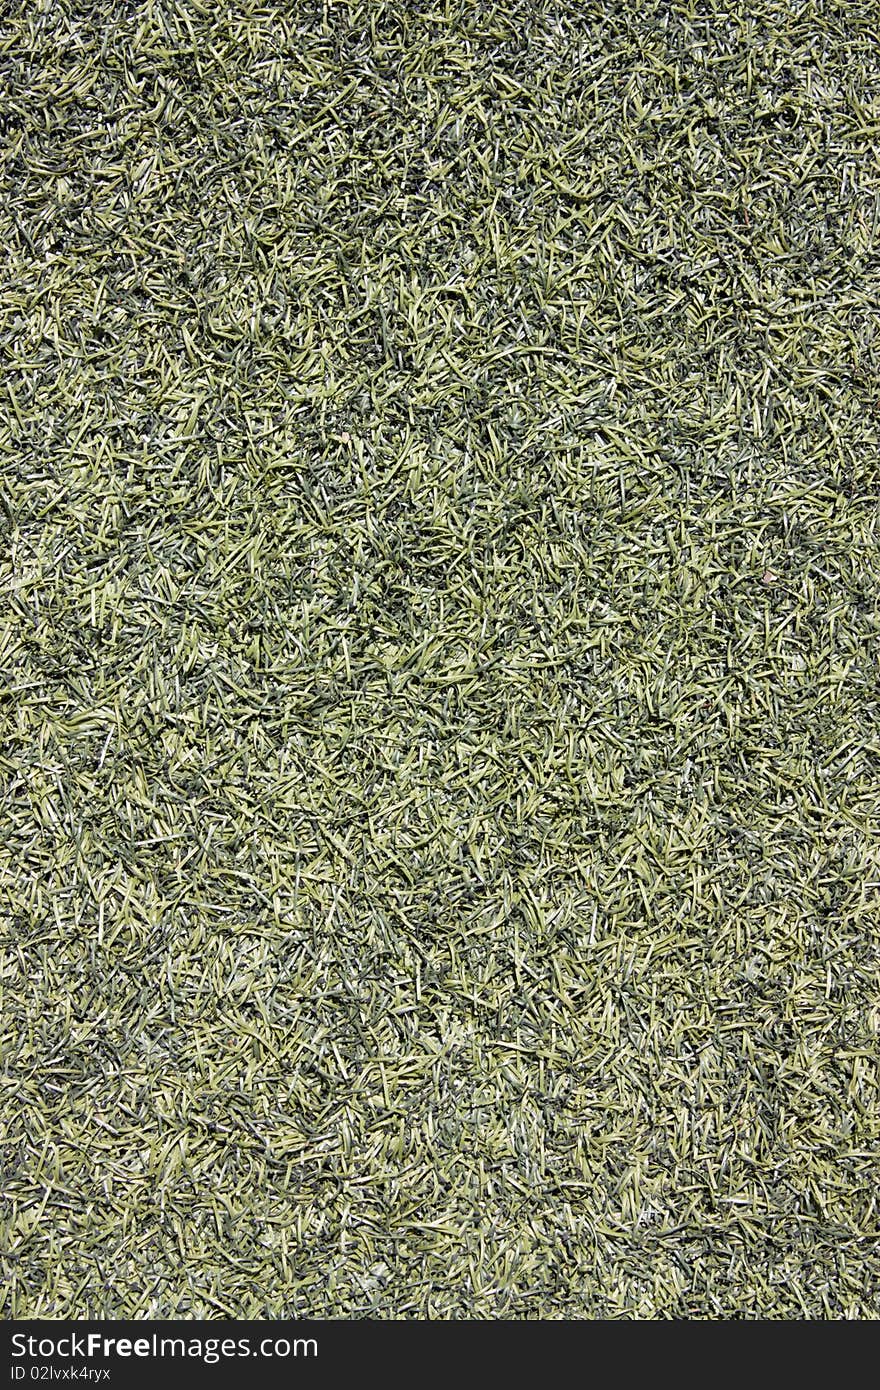 A green color grass carpet. A green color grass carpet